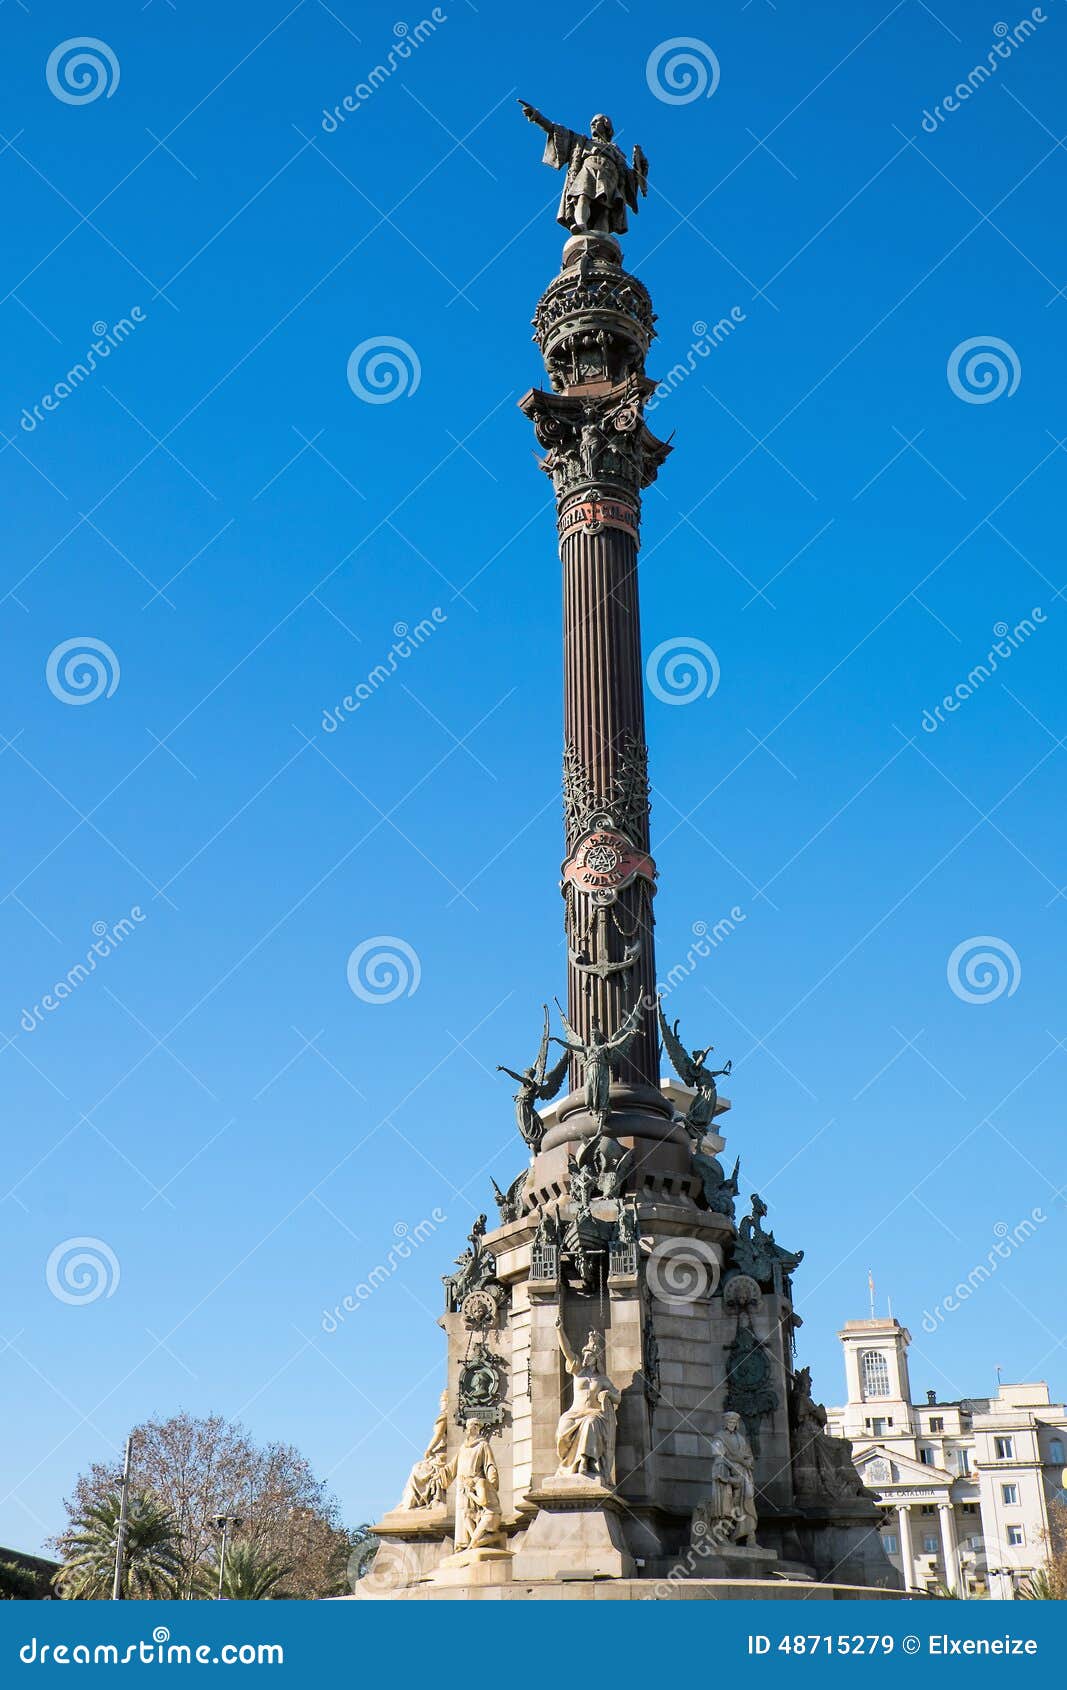 the columbus statue in barcelona